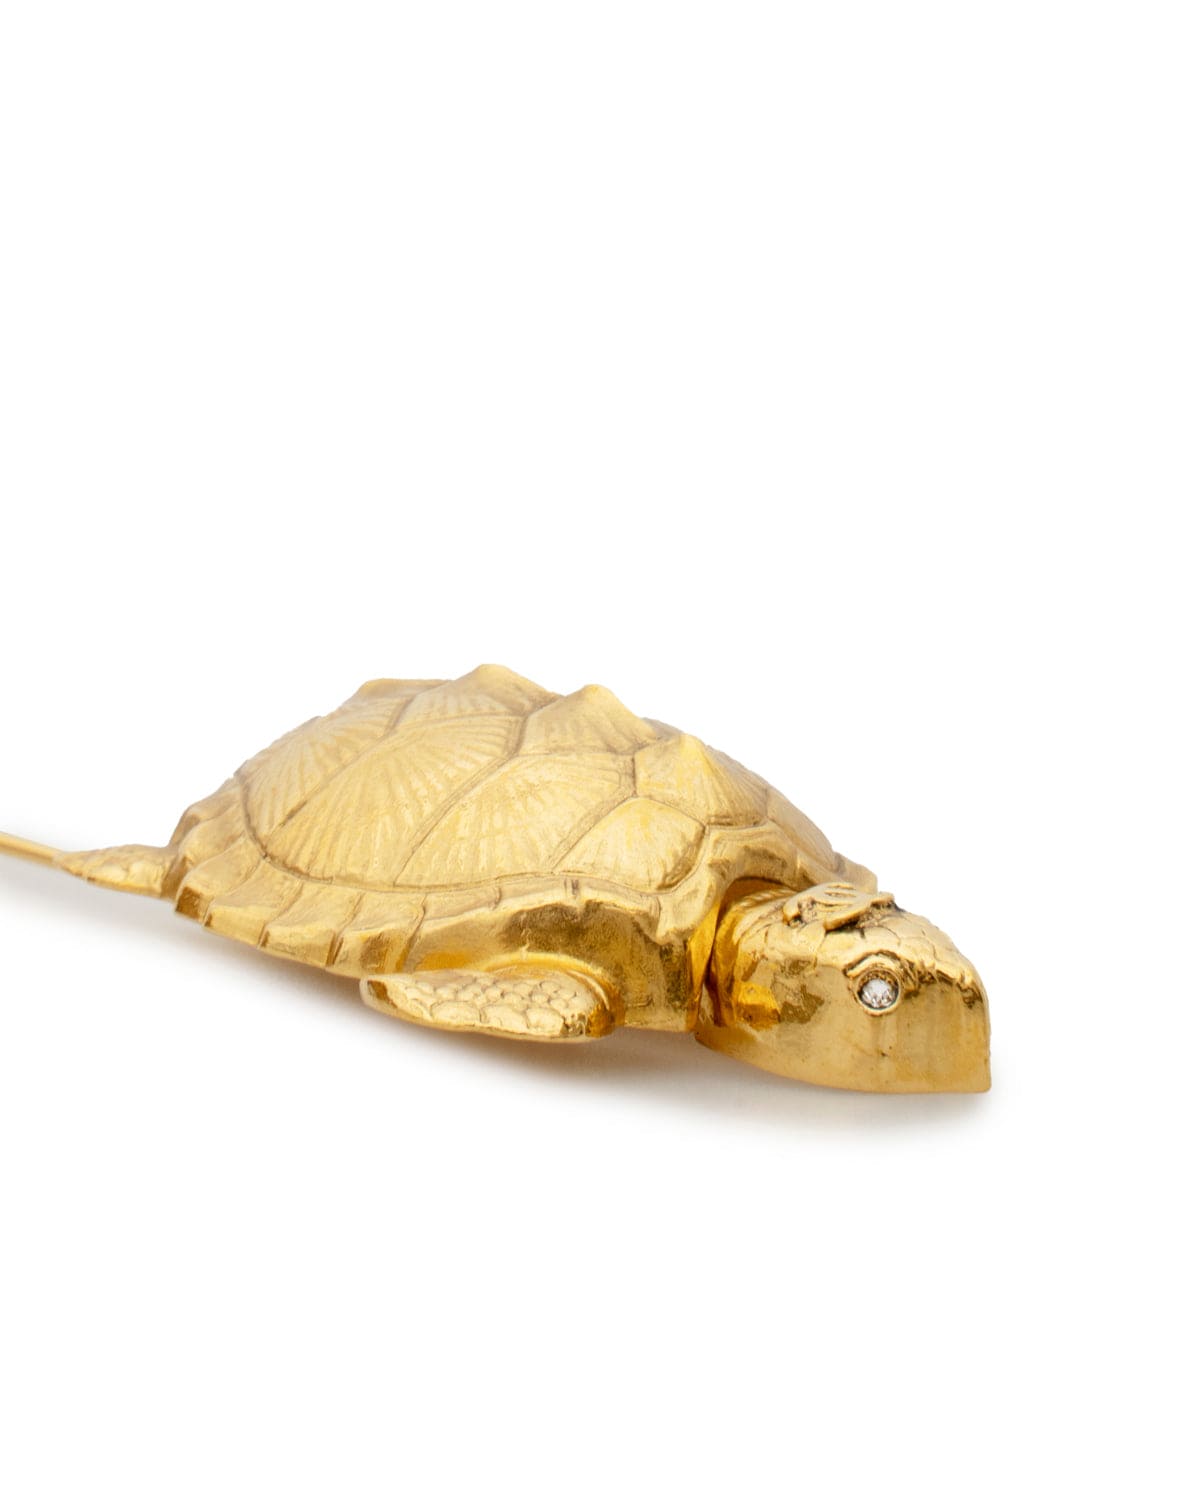 Chanel Chanel RARE Turtle Pin - AWL2439